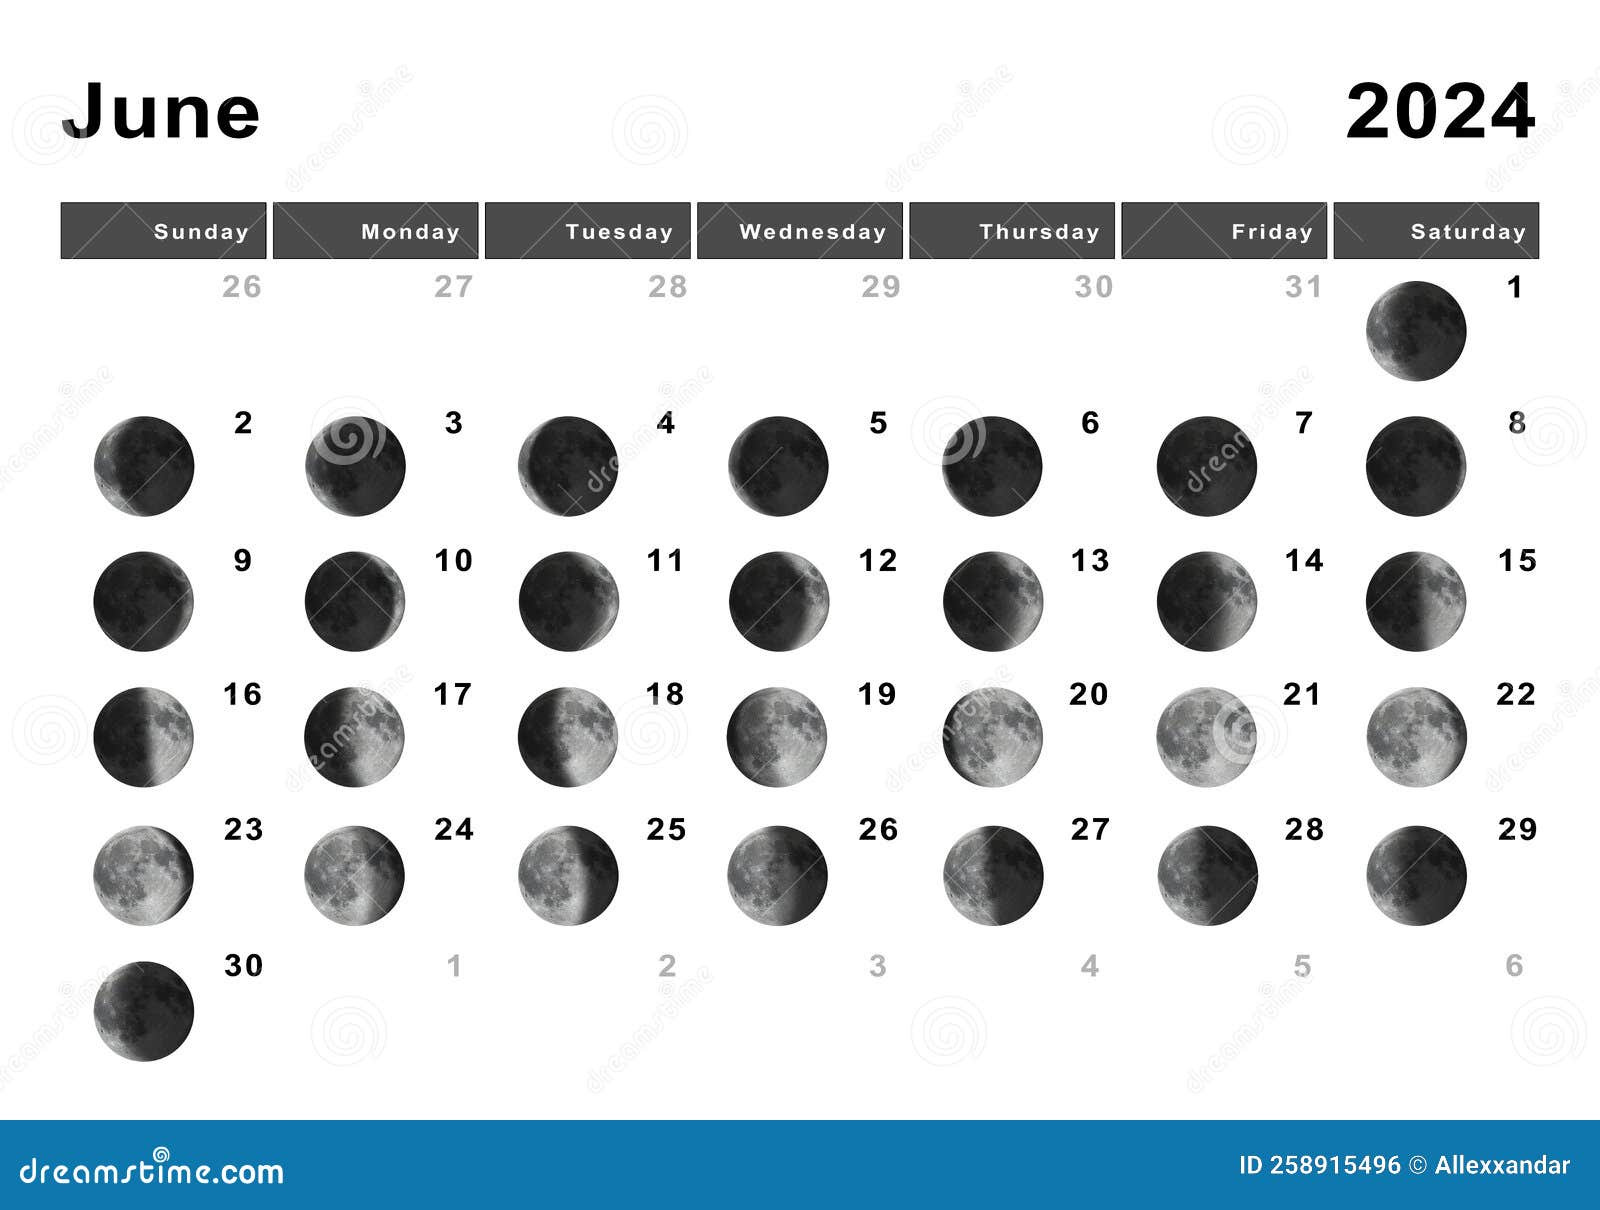 June 2024 Lunar Calendar, Moon Cycles Stock Illustration within June 2024 Moon Phase Calendar